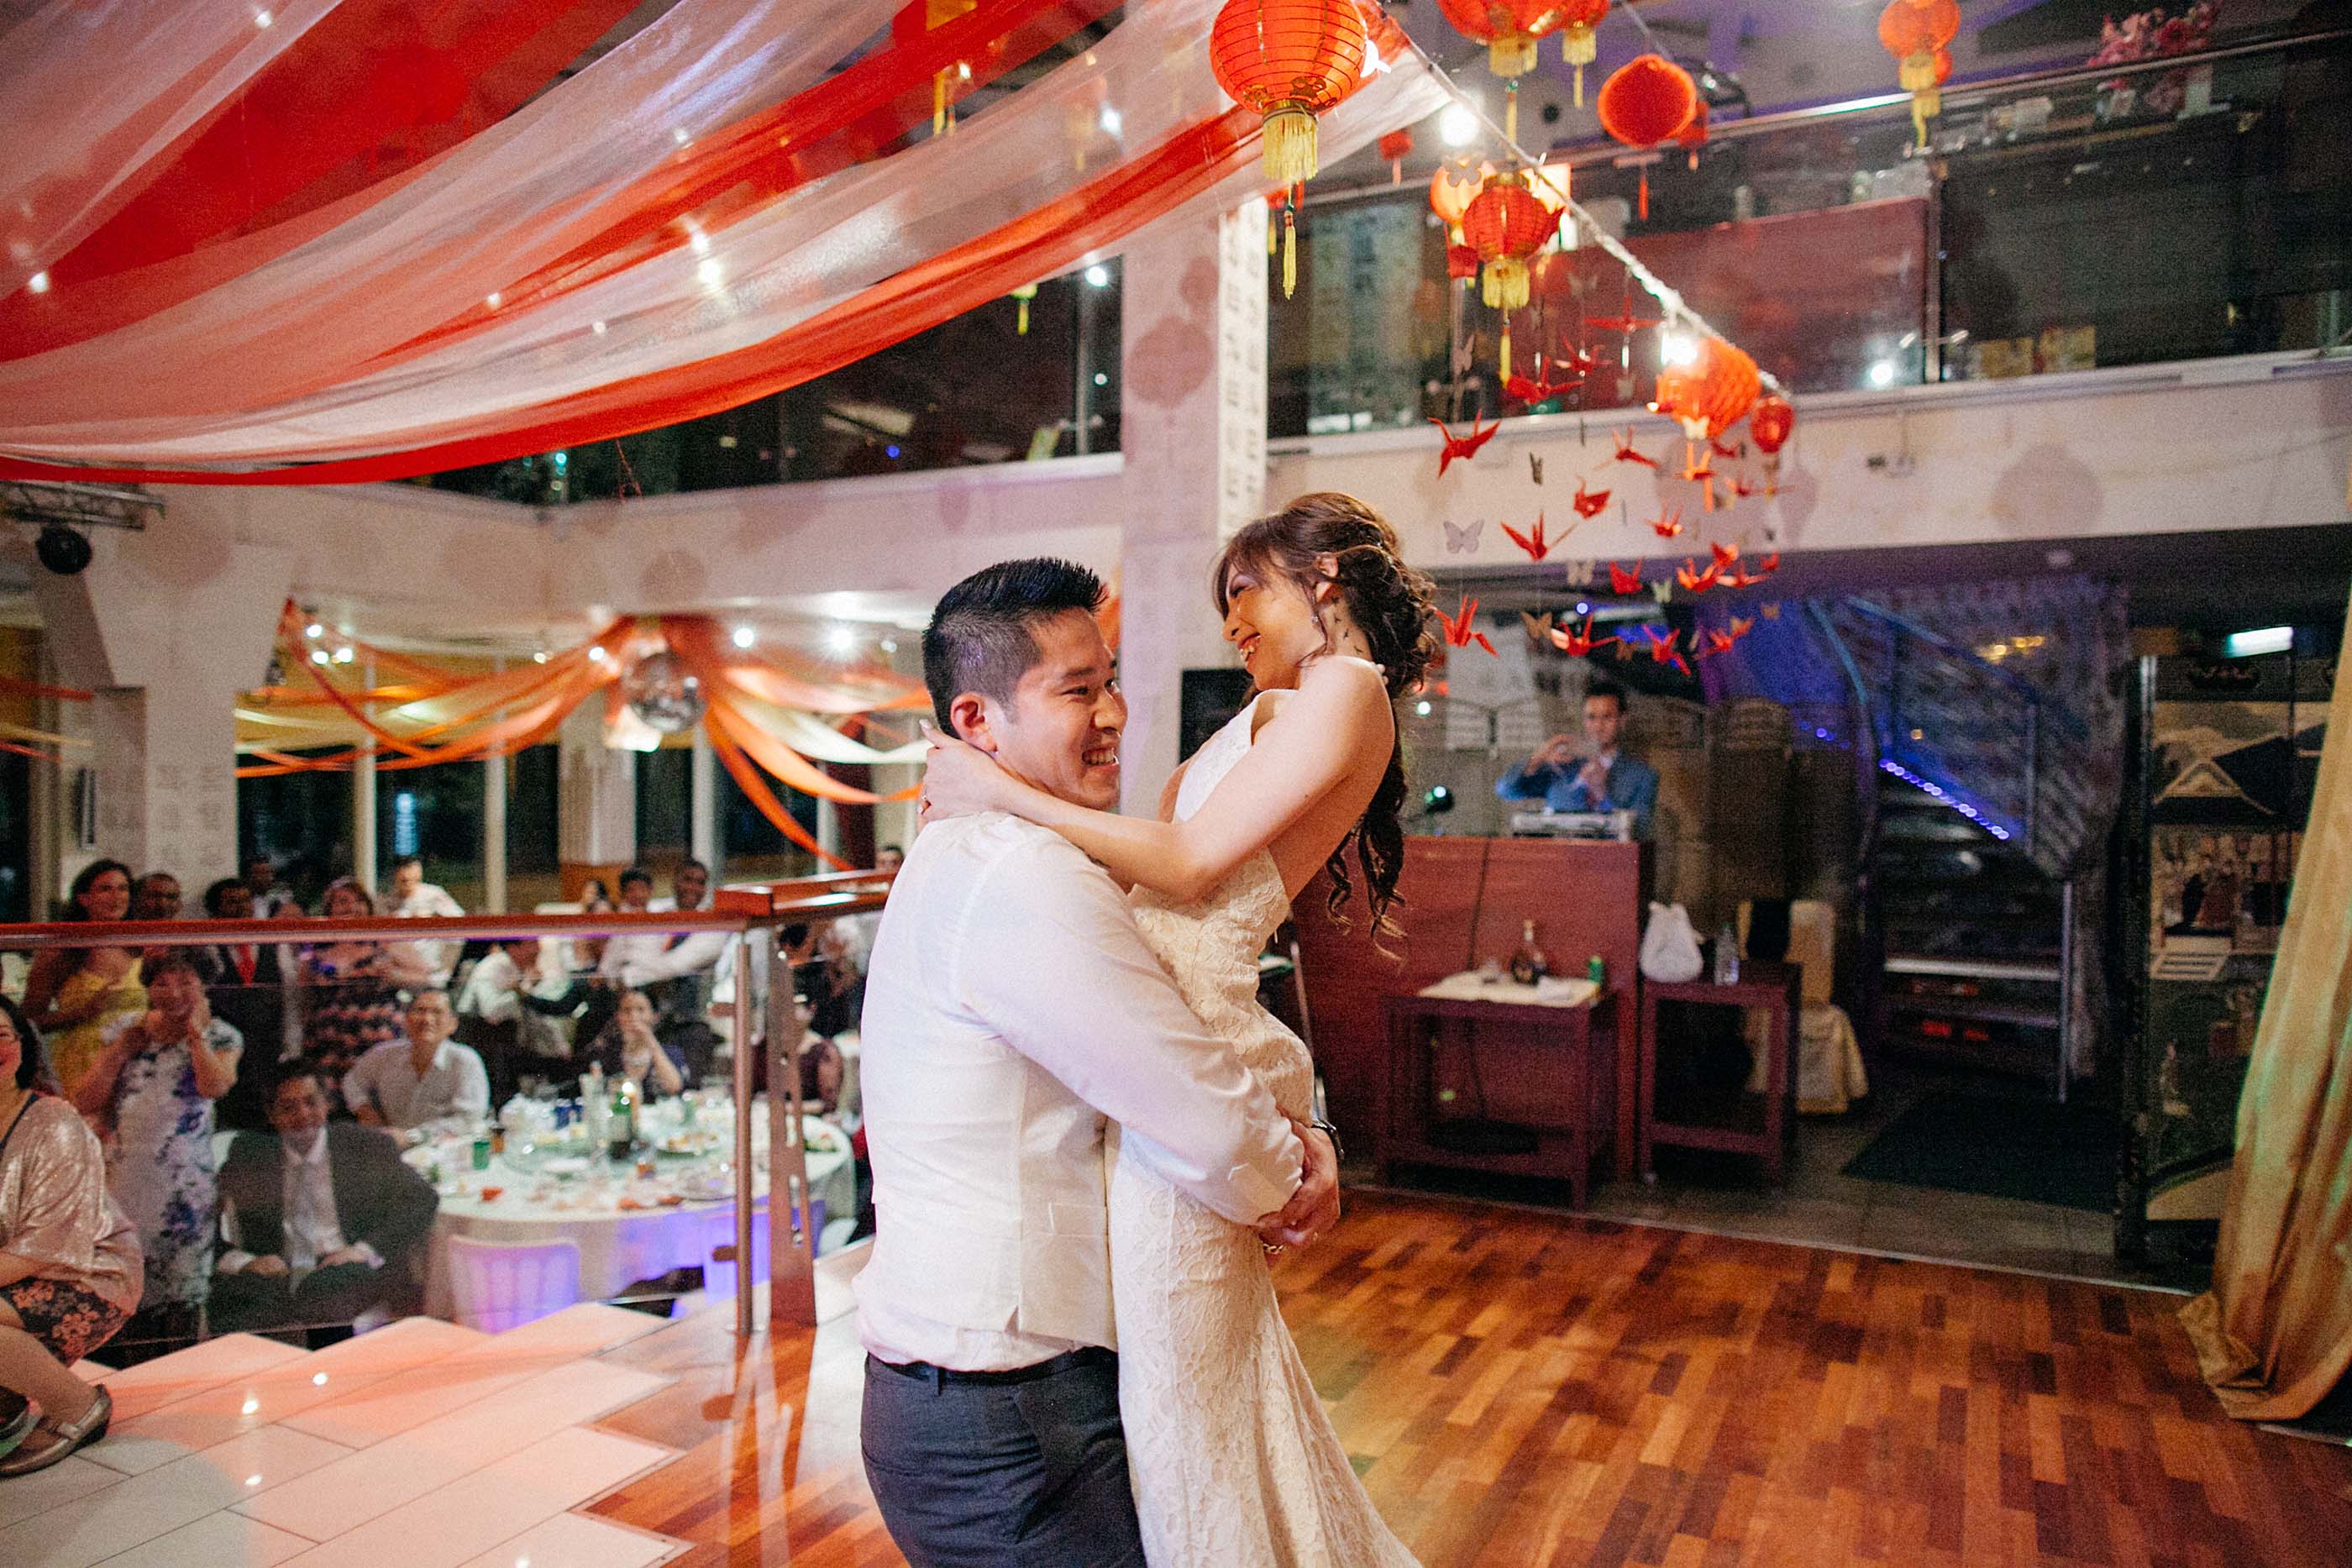 nicholas-lau-photo-photography-fine-art-film-wedding-london-asian-chinese-uk-mulitcultural-ceremony-reception-groom-picking-up-bride-during-dance-china-boulevard